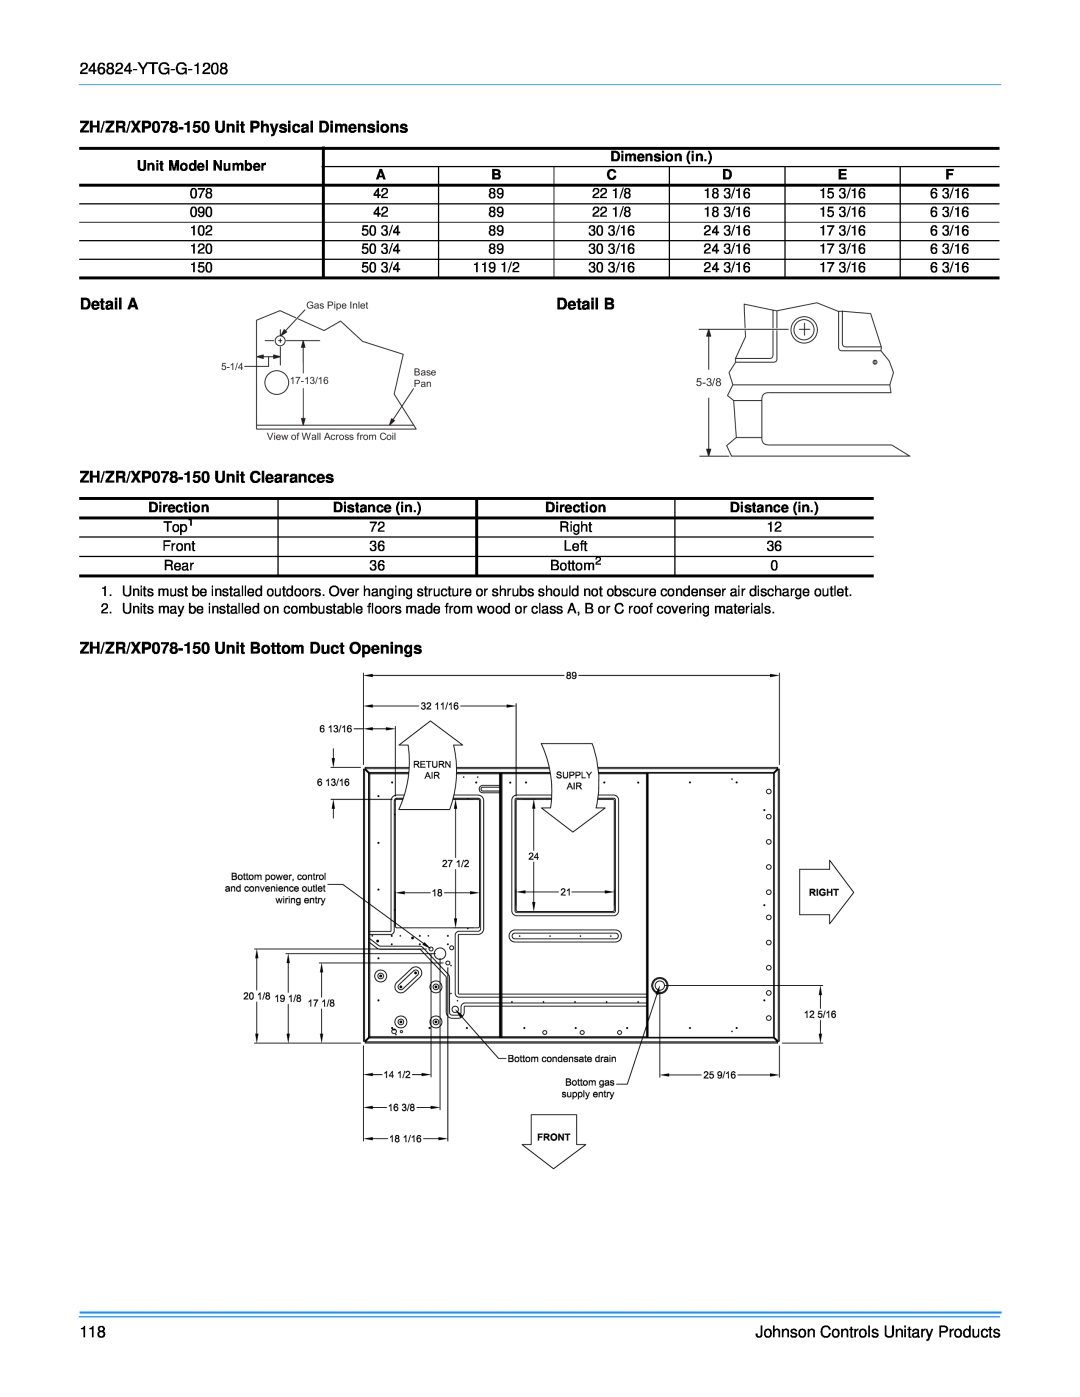 York R-410A manual Detail B, ZH/ZR/XP078-150Unit Physical Dimensions, Detail A, ZH/ZR/XP078-150Unit Clearances 